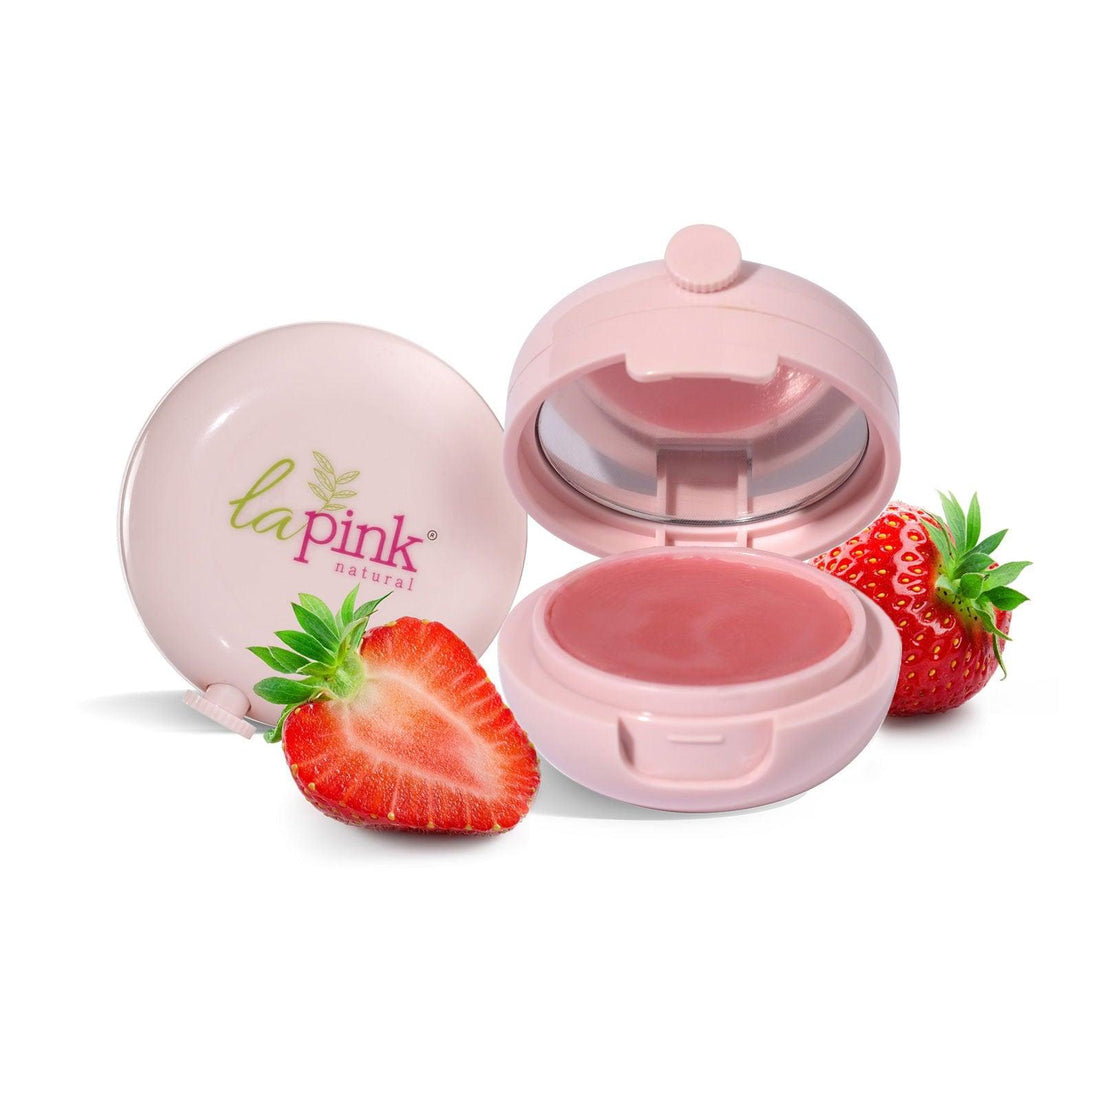 Strawberry Lip Care Balm 15 gm (Pack of 2) - La Pink